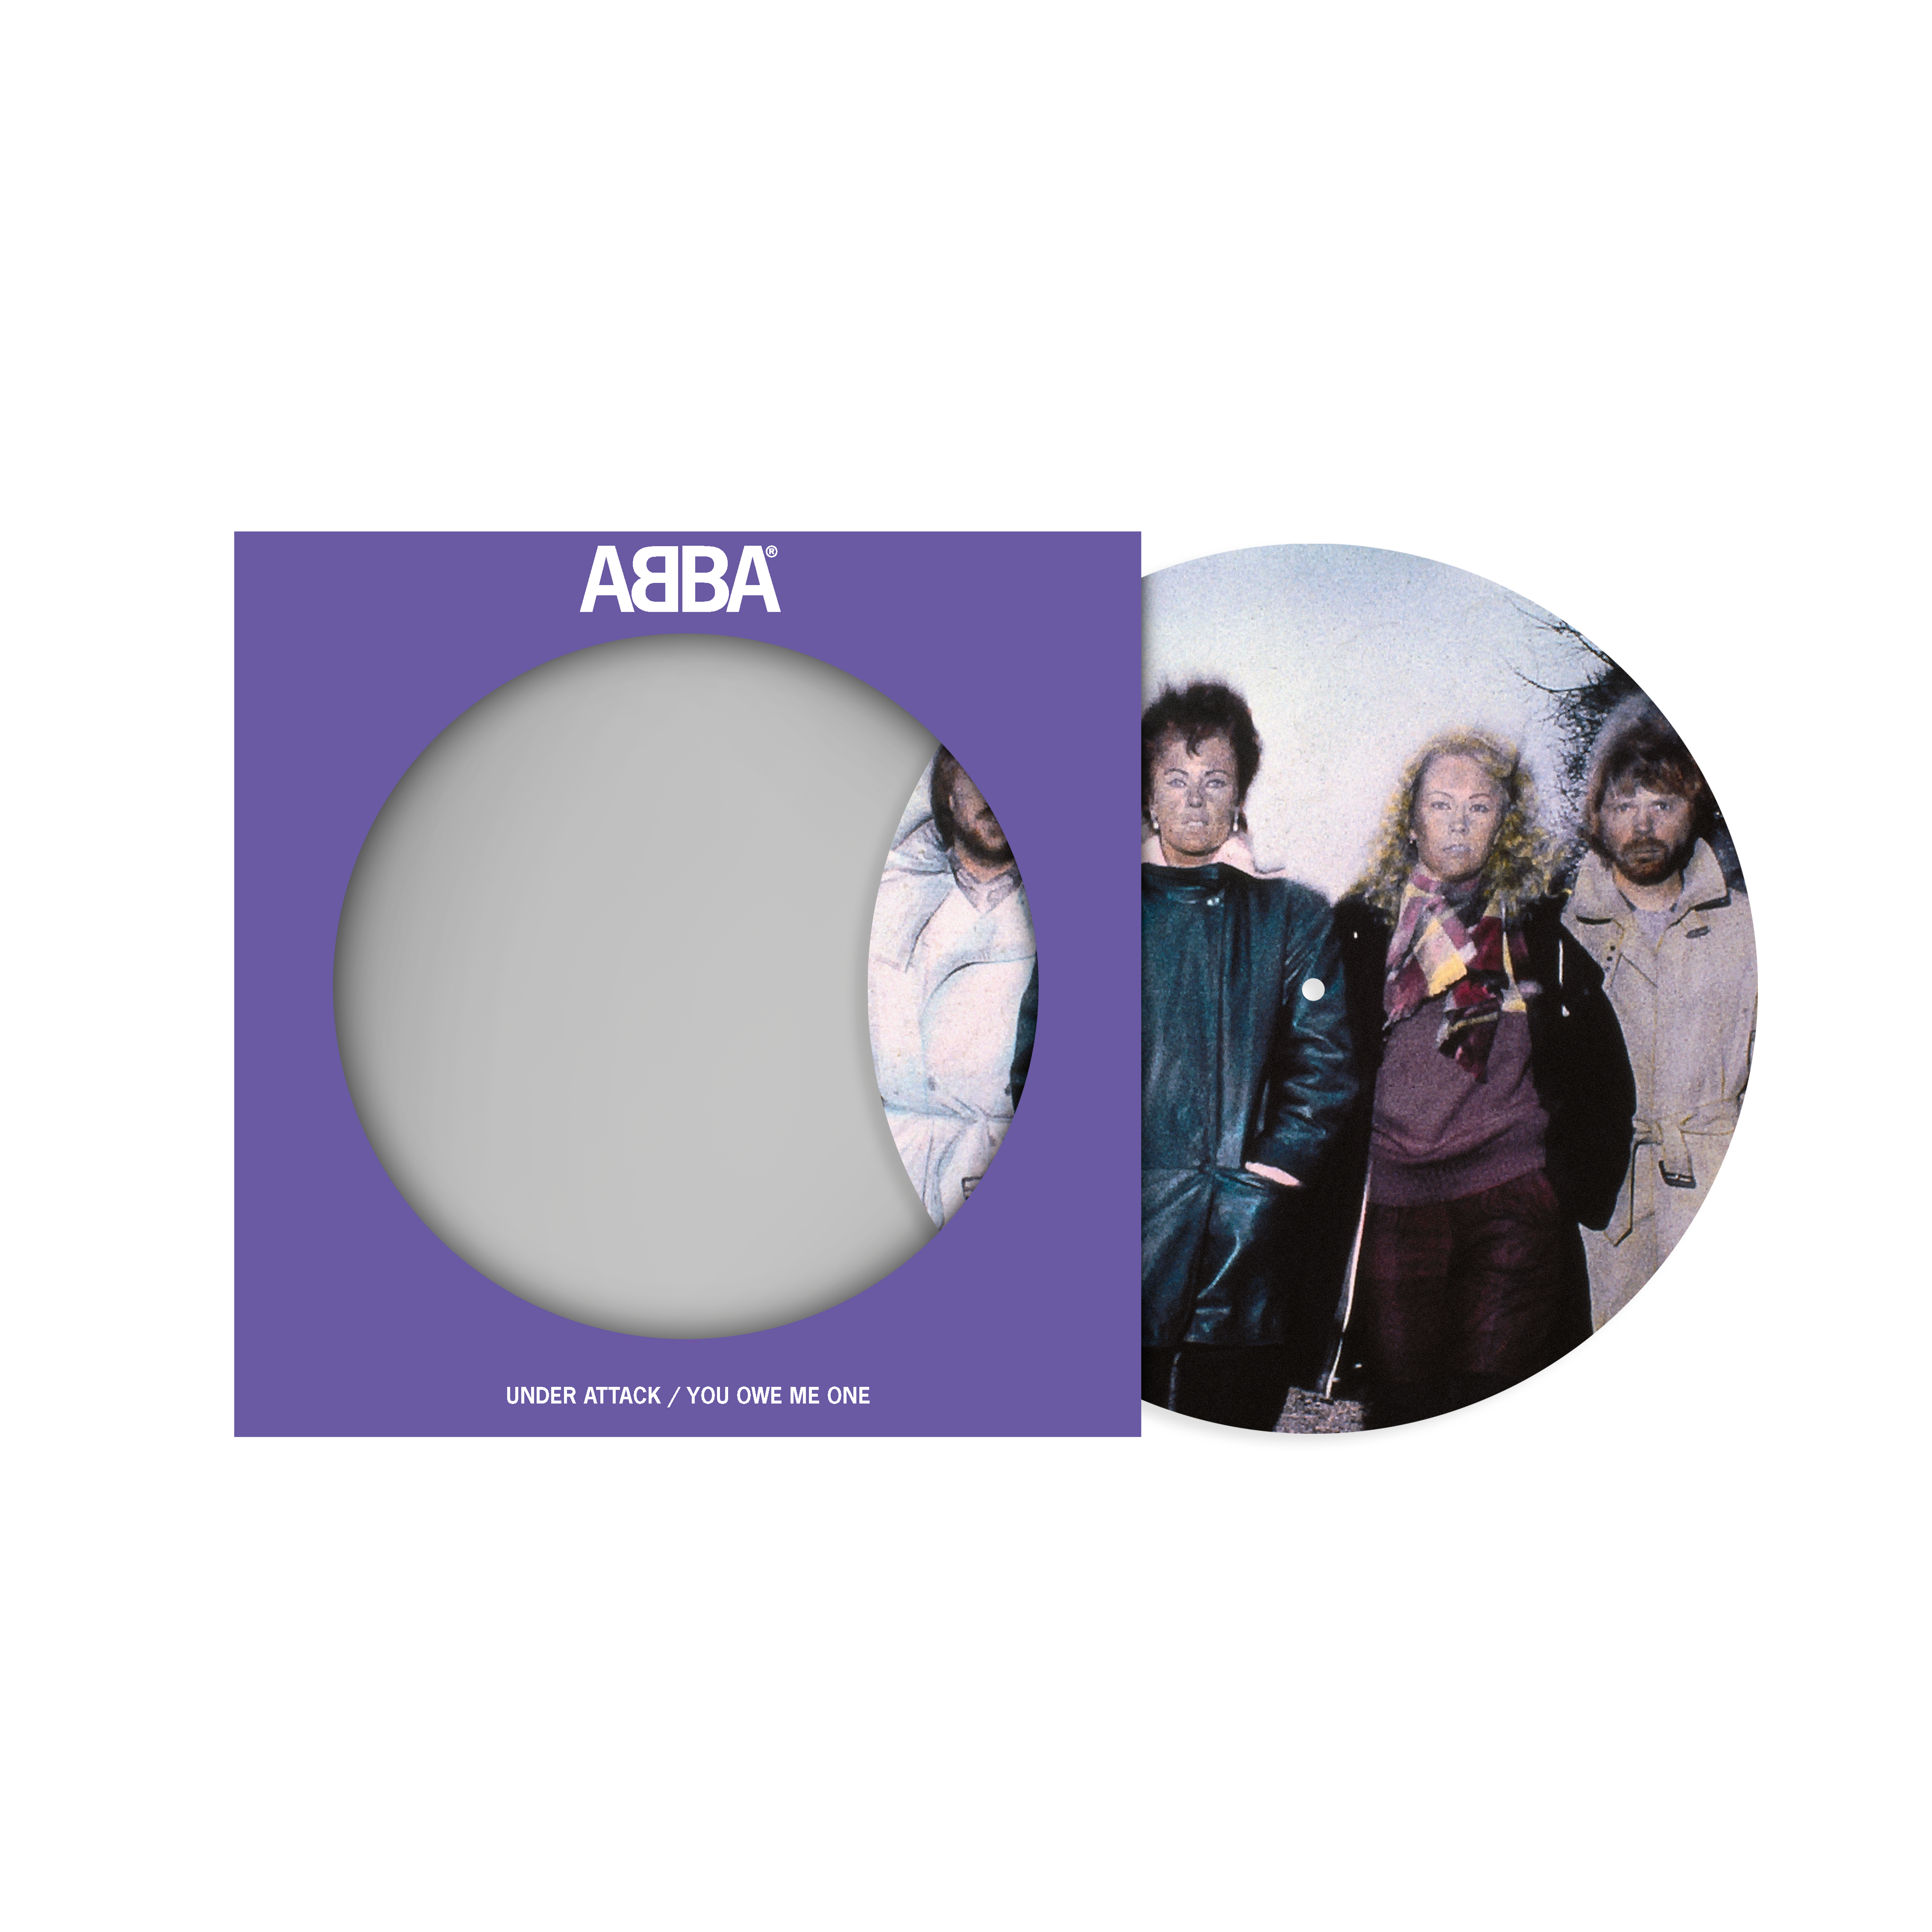 ABBA - Under Attack: Picture Disc Vinyl 7" Single